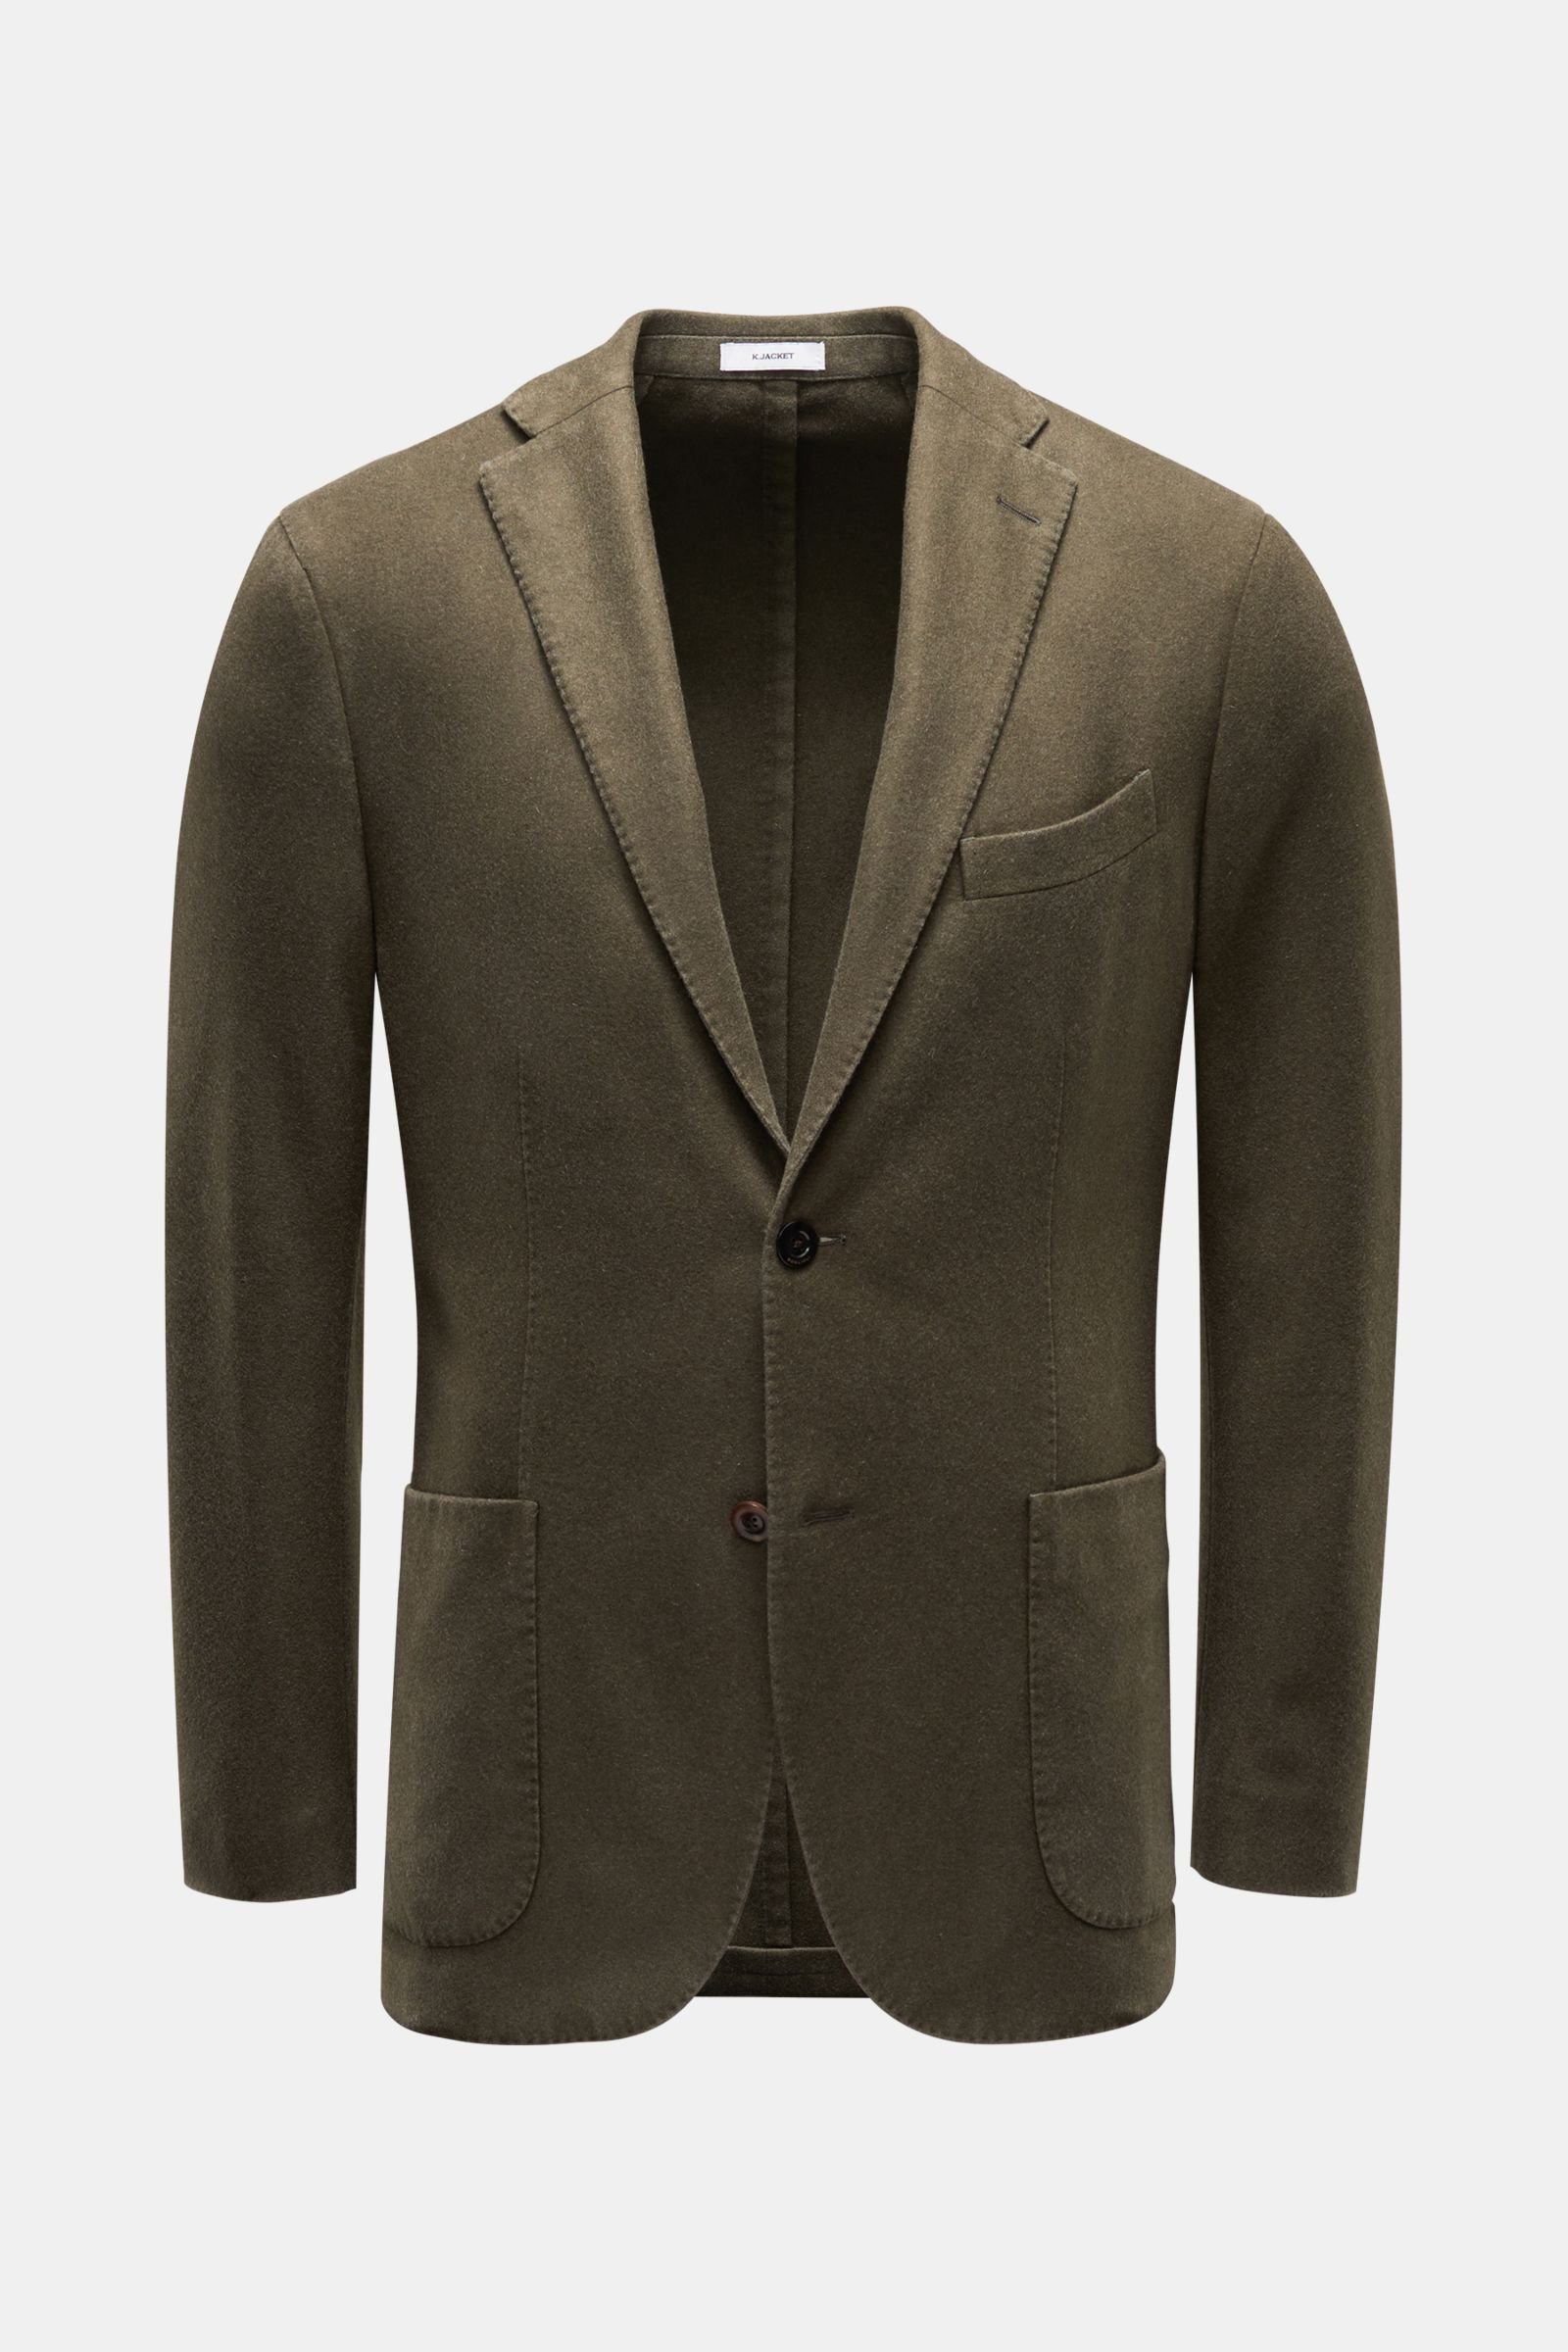 Cashmere smart-casual jacket olive